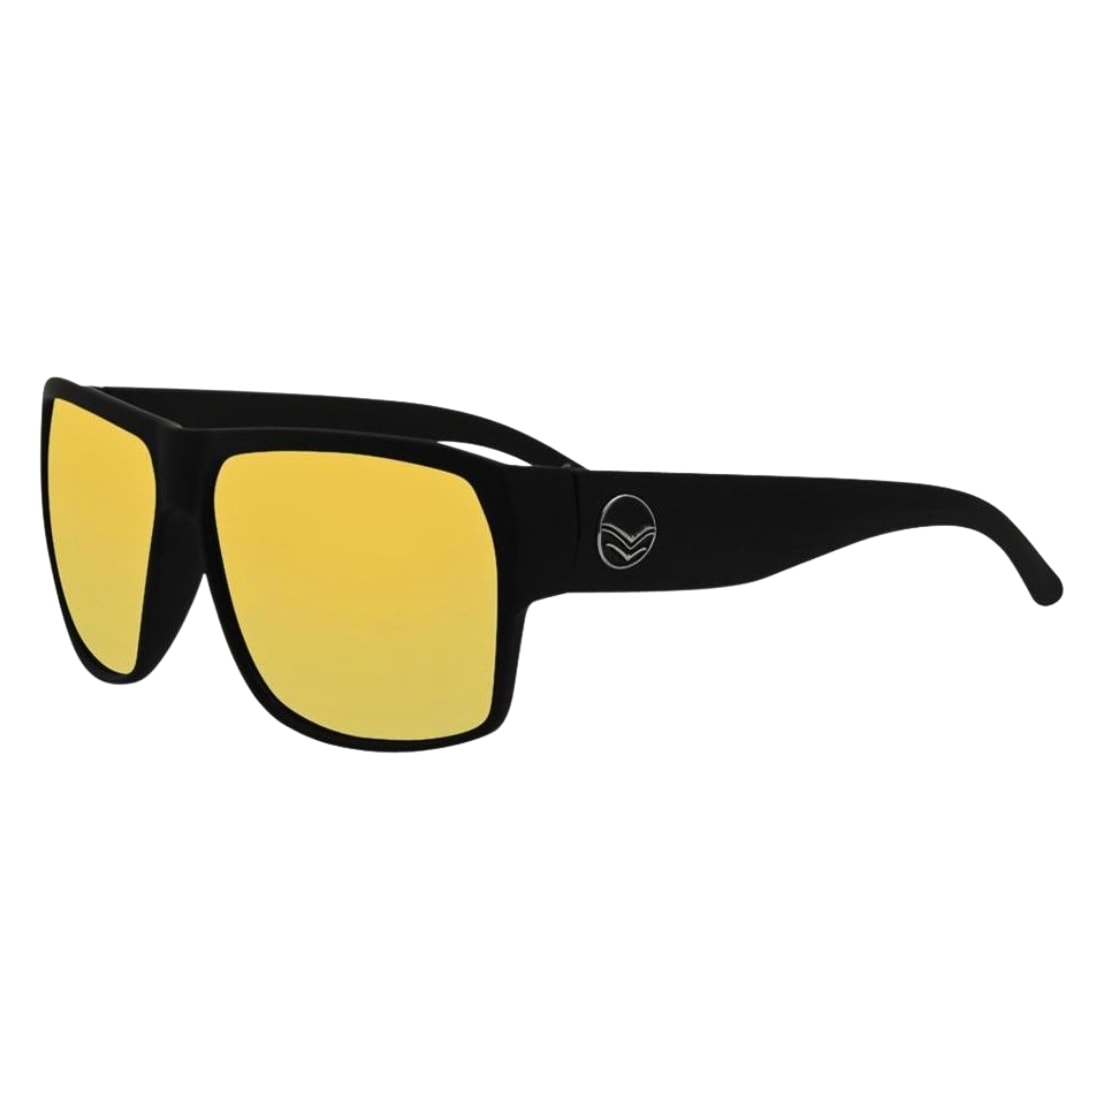 I-Sea Nick I Sunglasses - Black/Yellow Polarised - Square/Rectangular Sunglasses by I-Sea